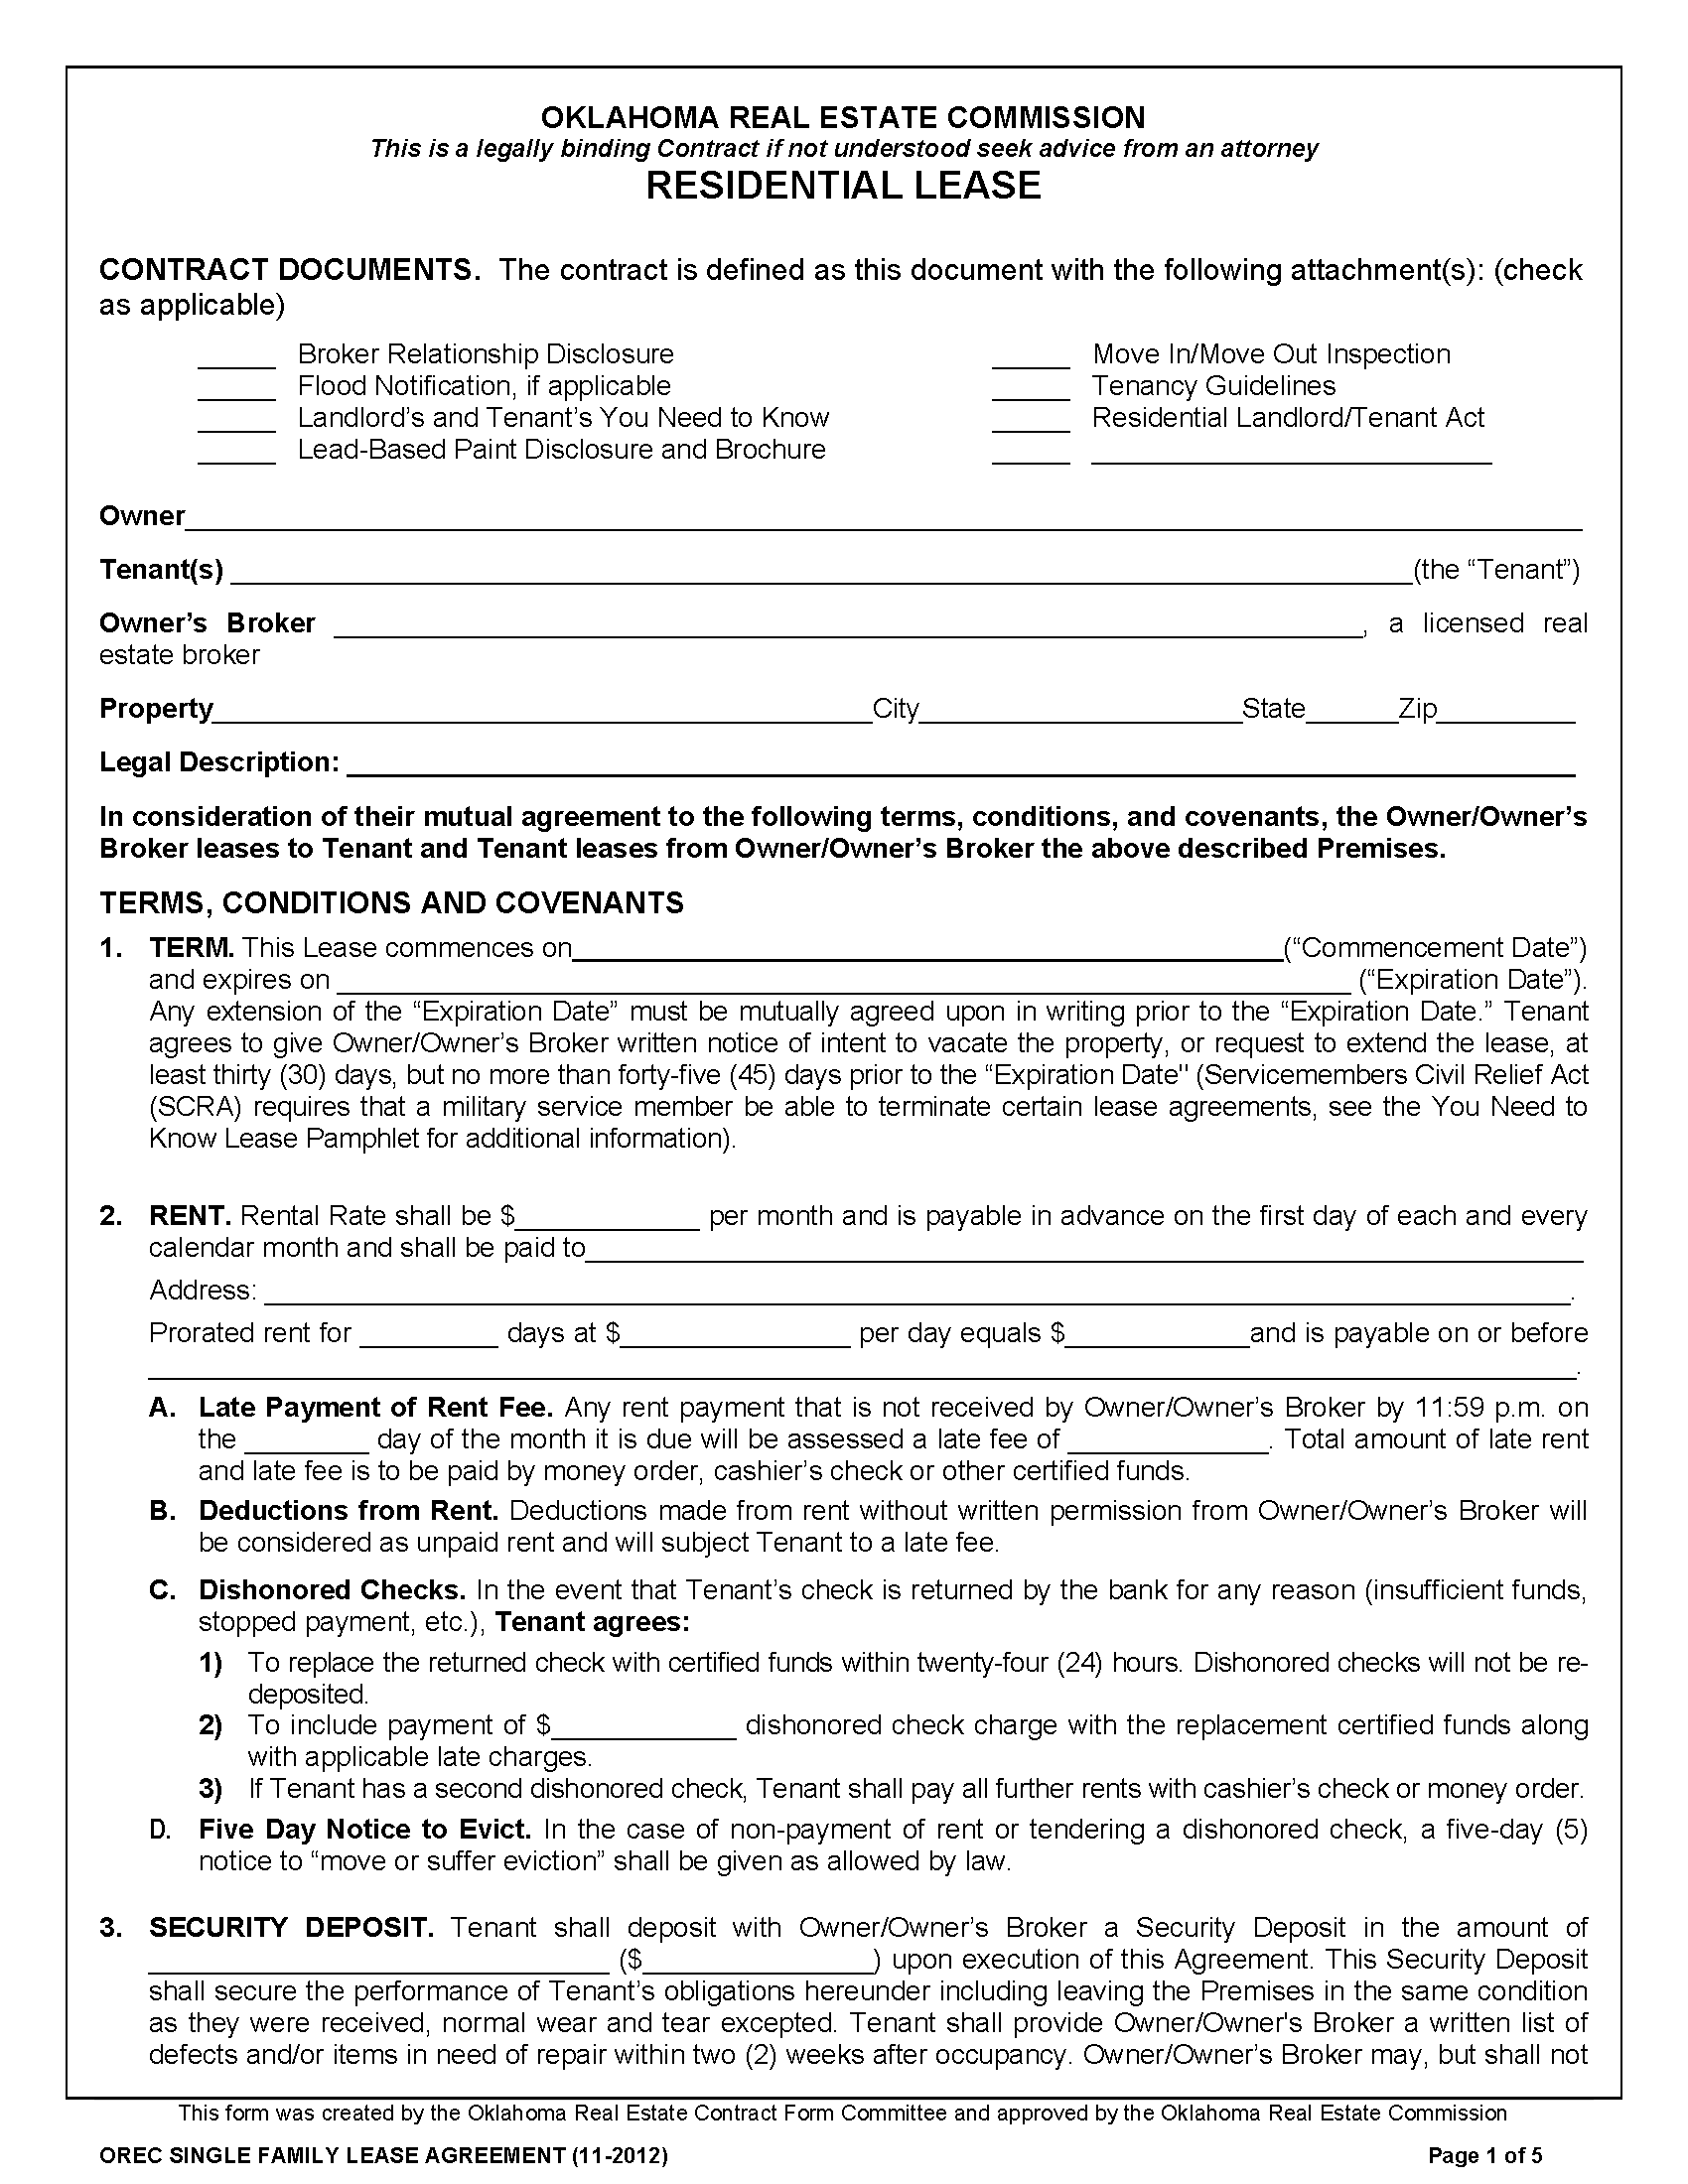 free-oklahoma-standard-residential-lease-agreement-pdf-word-rtf